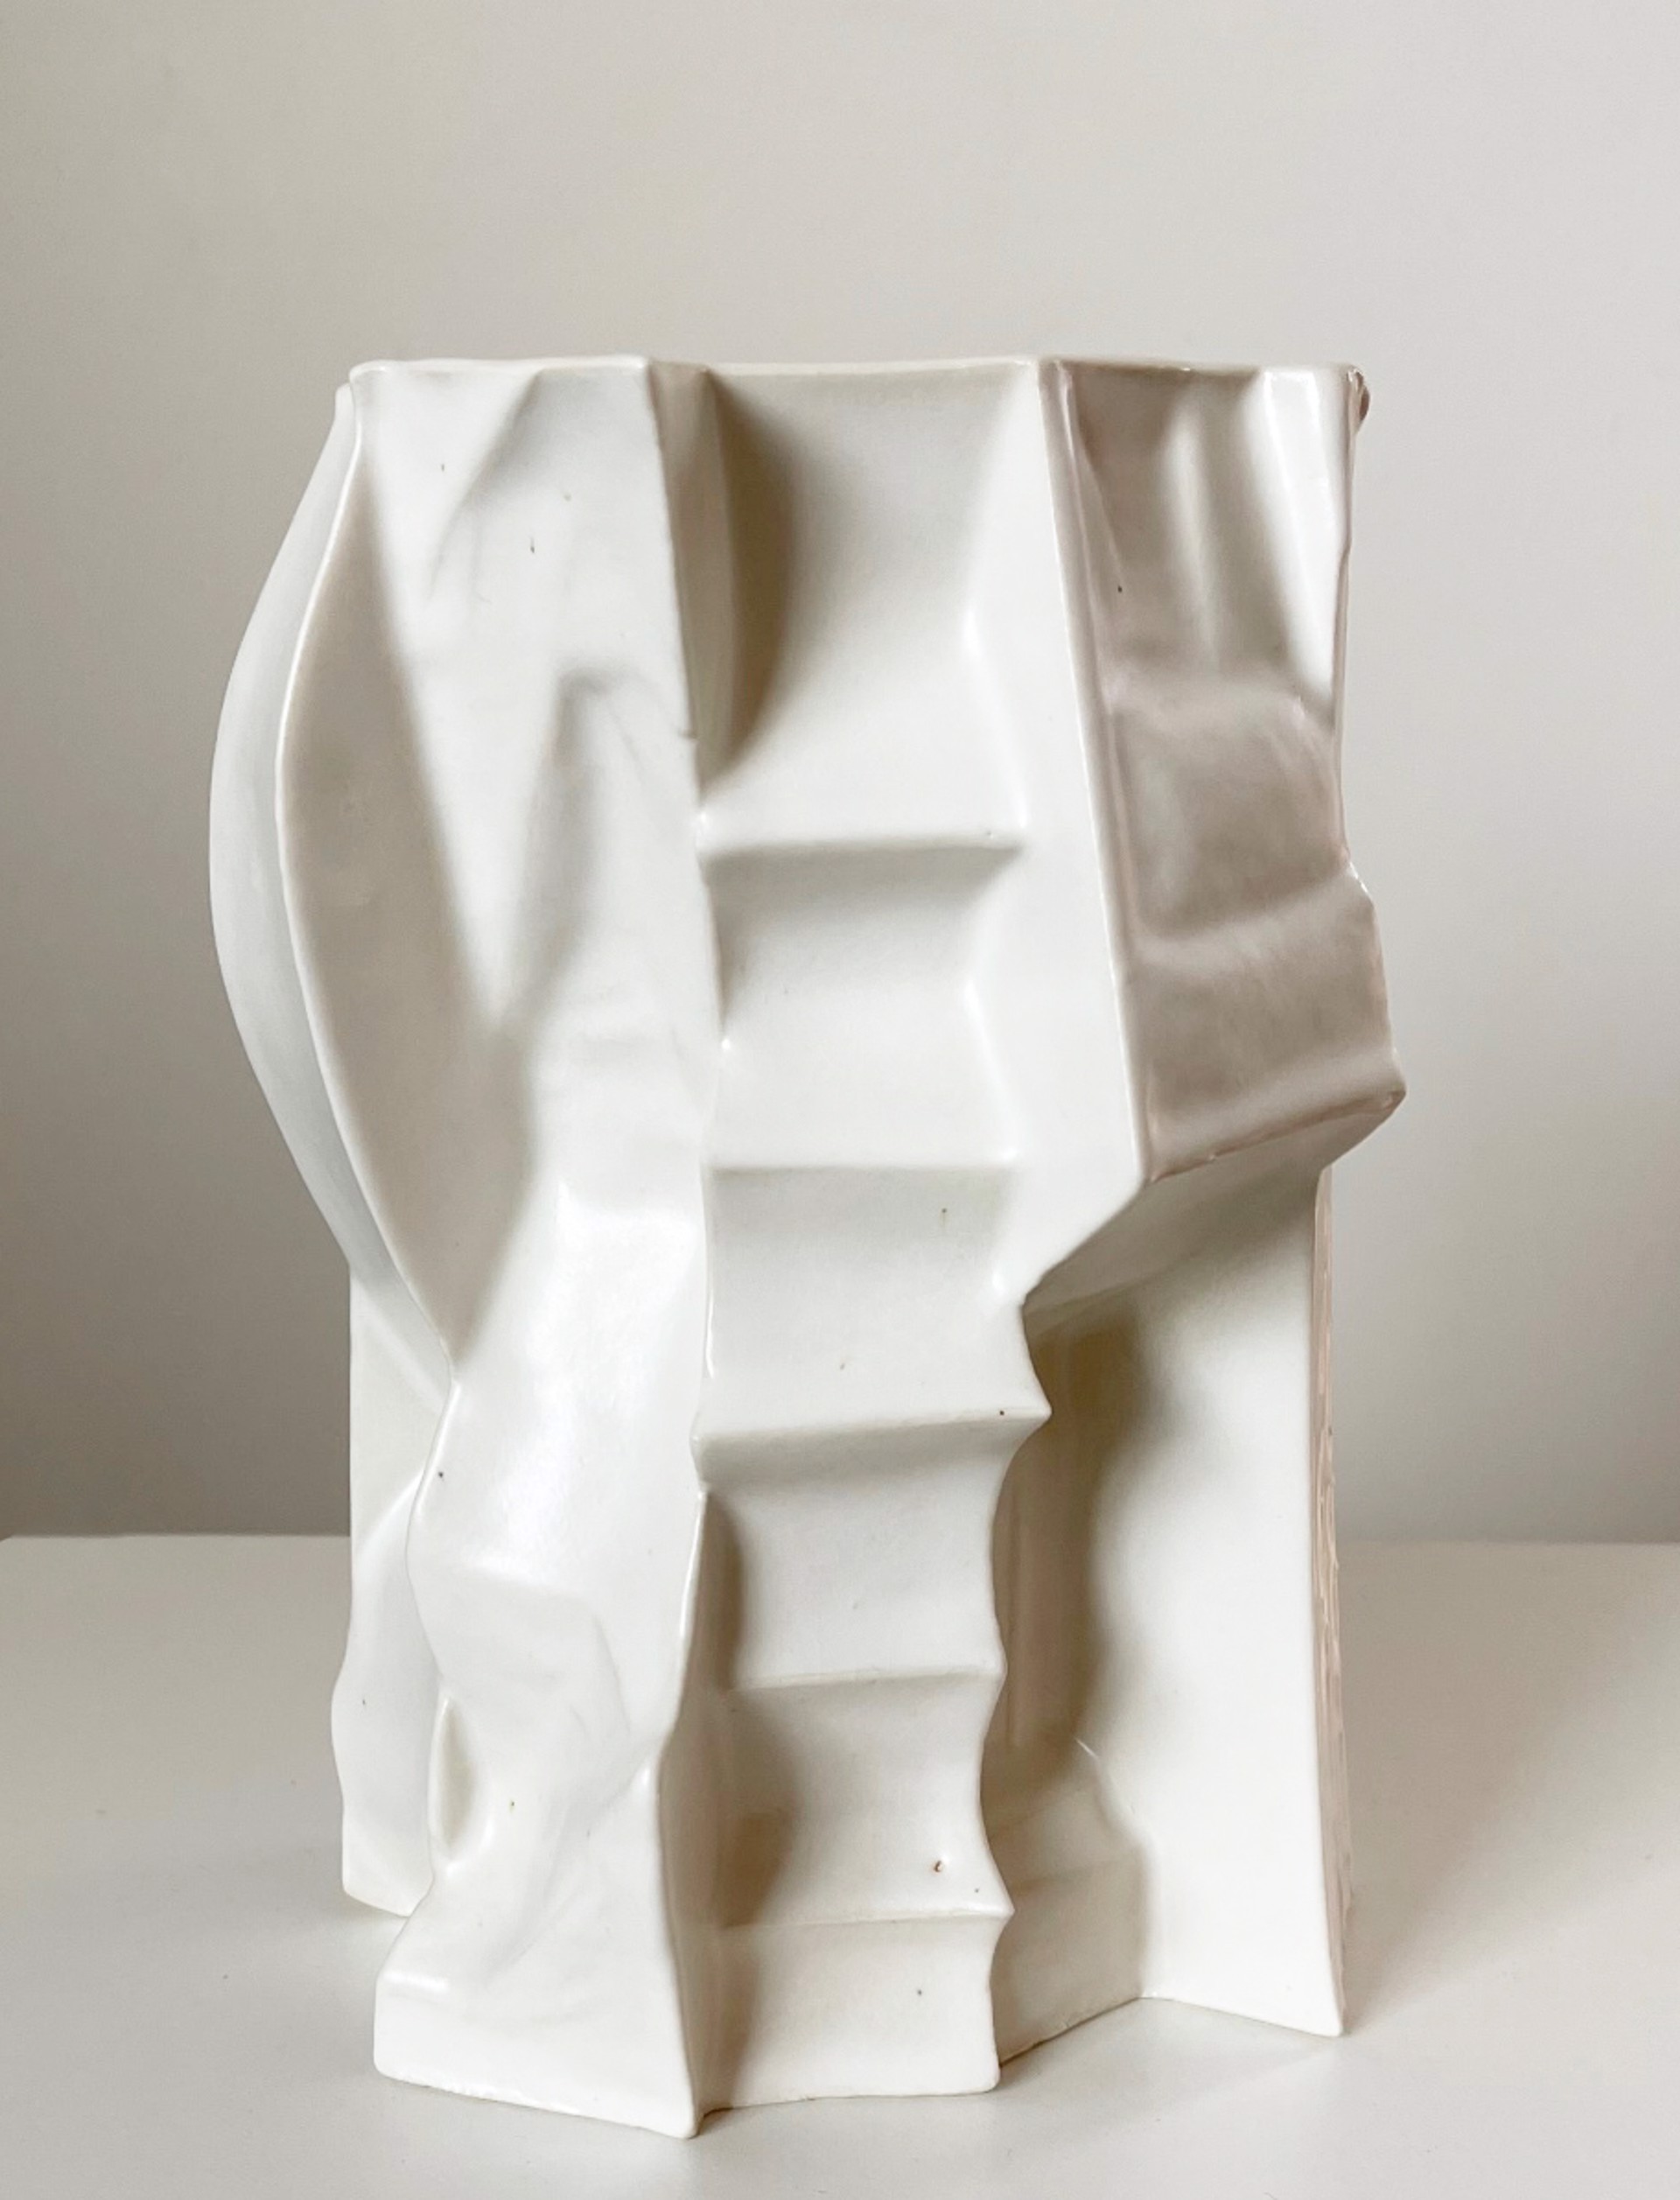 Wedge Vase by Ceramics Factory